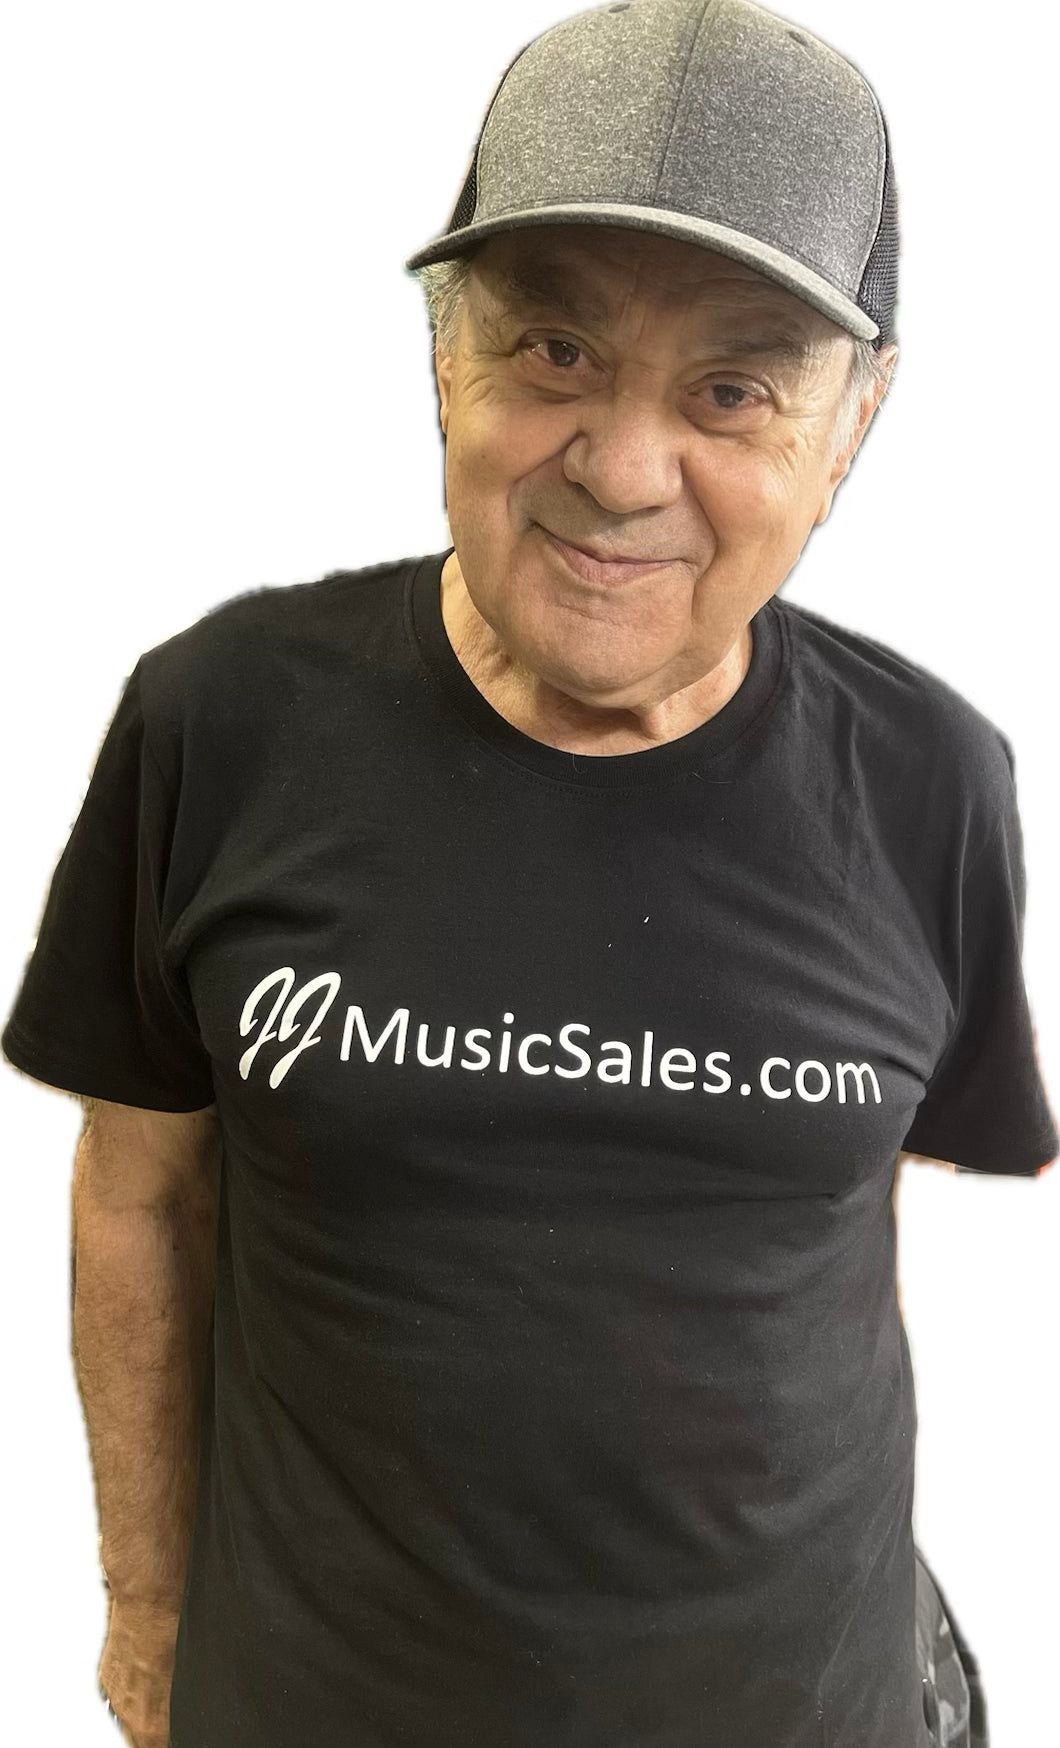 JJ Music Sales T-Shirts